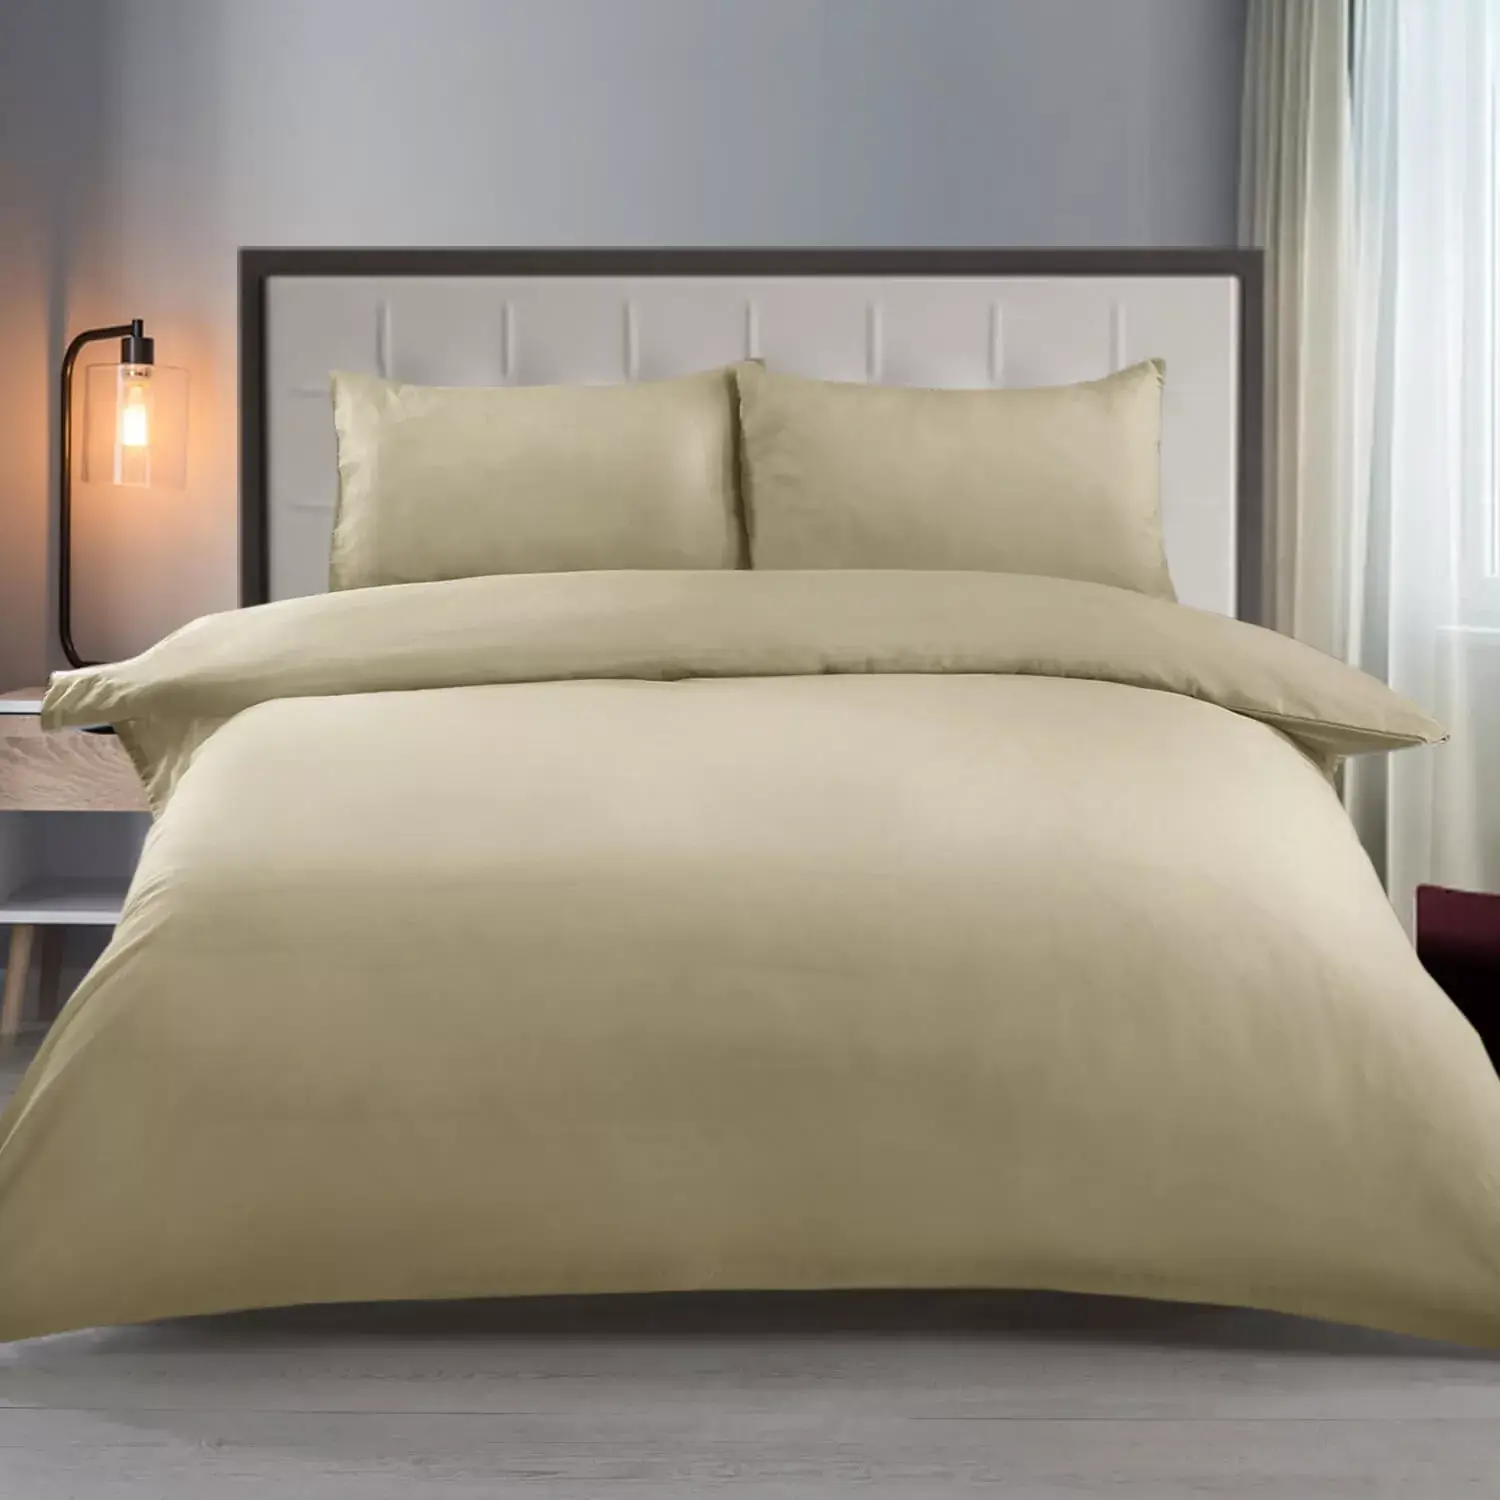 Egyptian cotton duvet cover |Cotton comfort bedding|